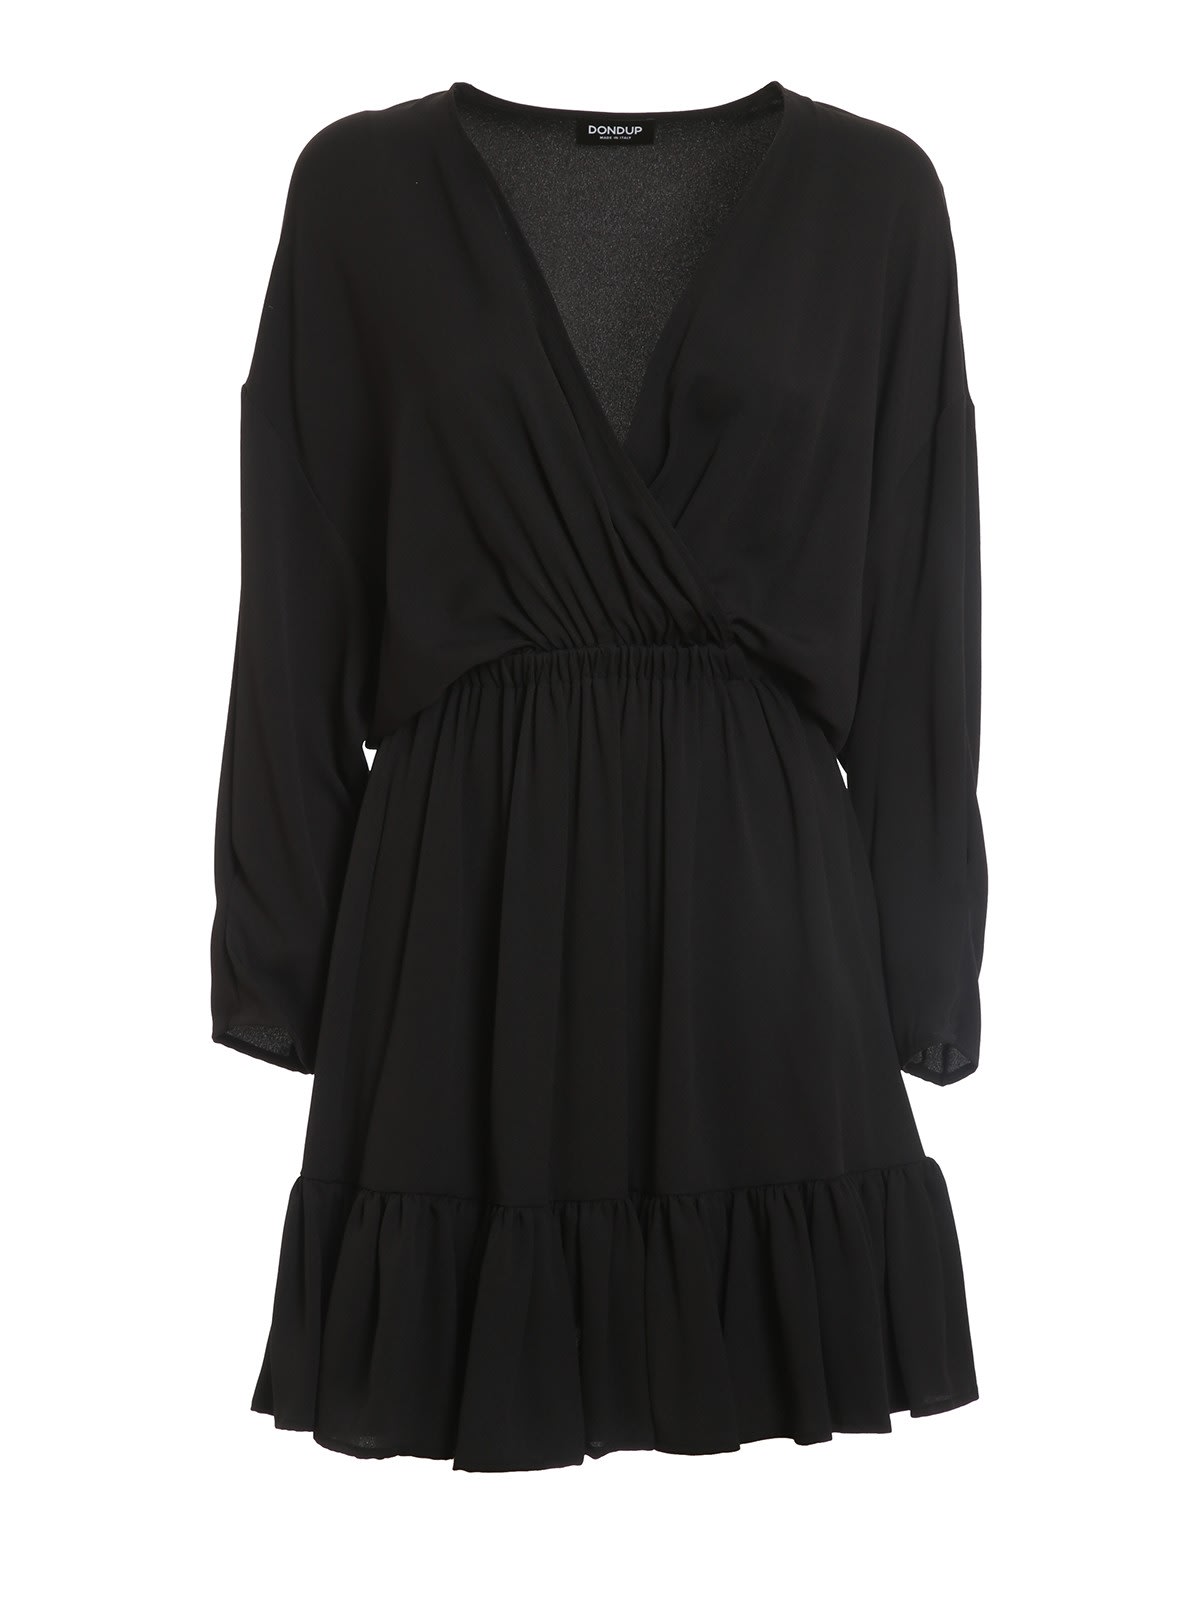 Dondup Black Silk Dress